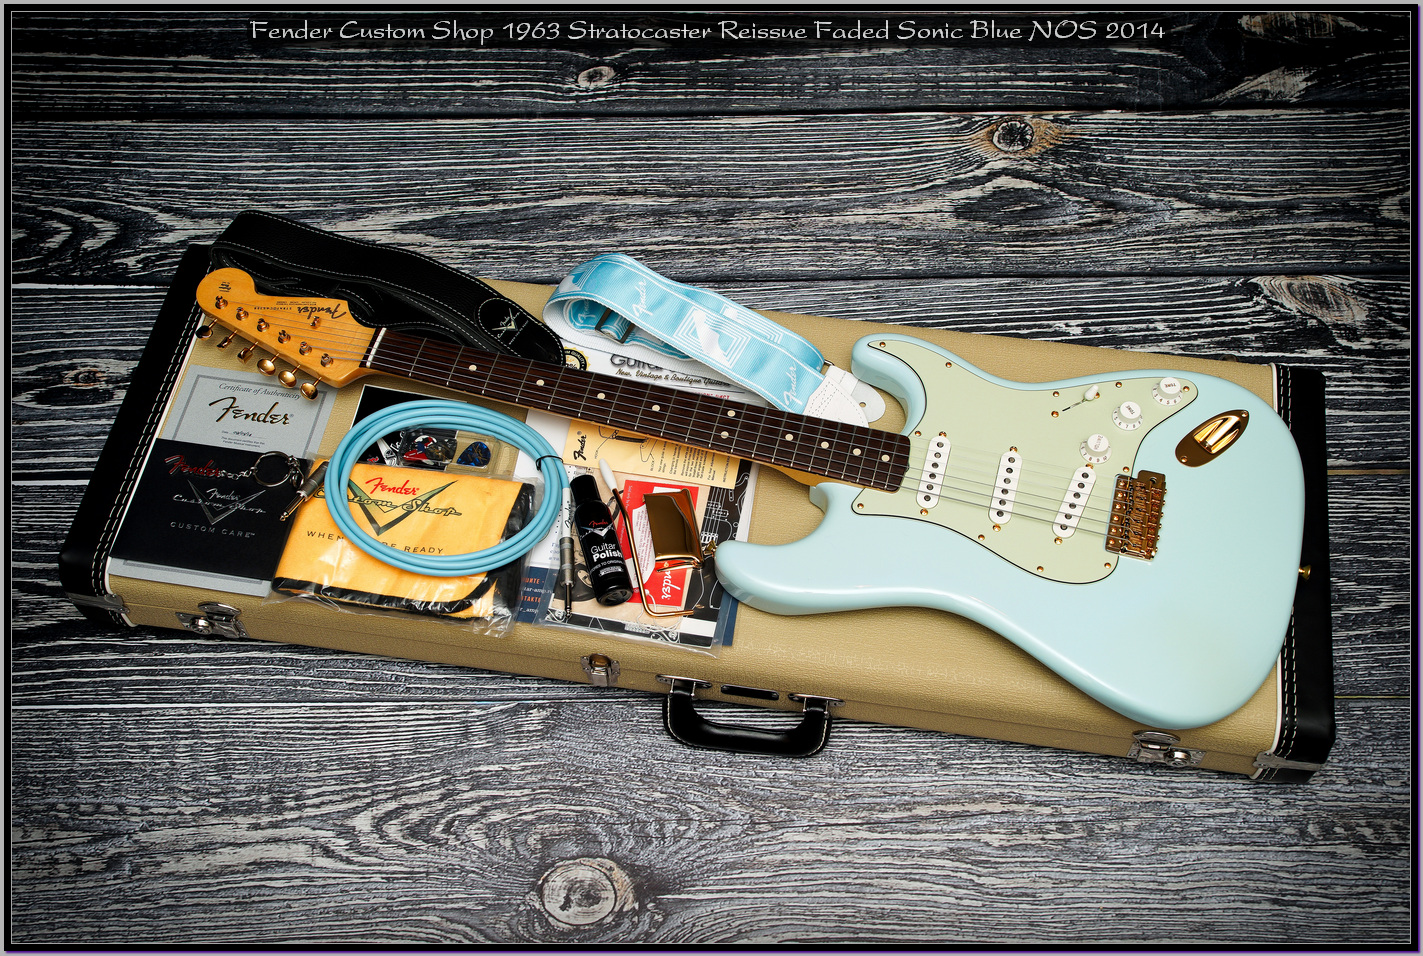 Fender Custom Shop 1963 Stratocaster Reissue Faded Sonic Blue NOS 2014 01a_x1400.jpg